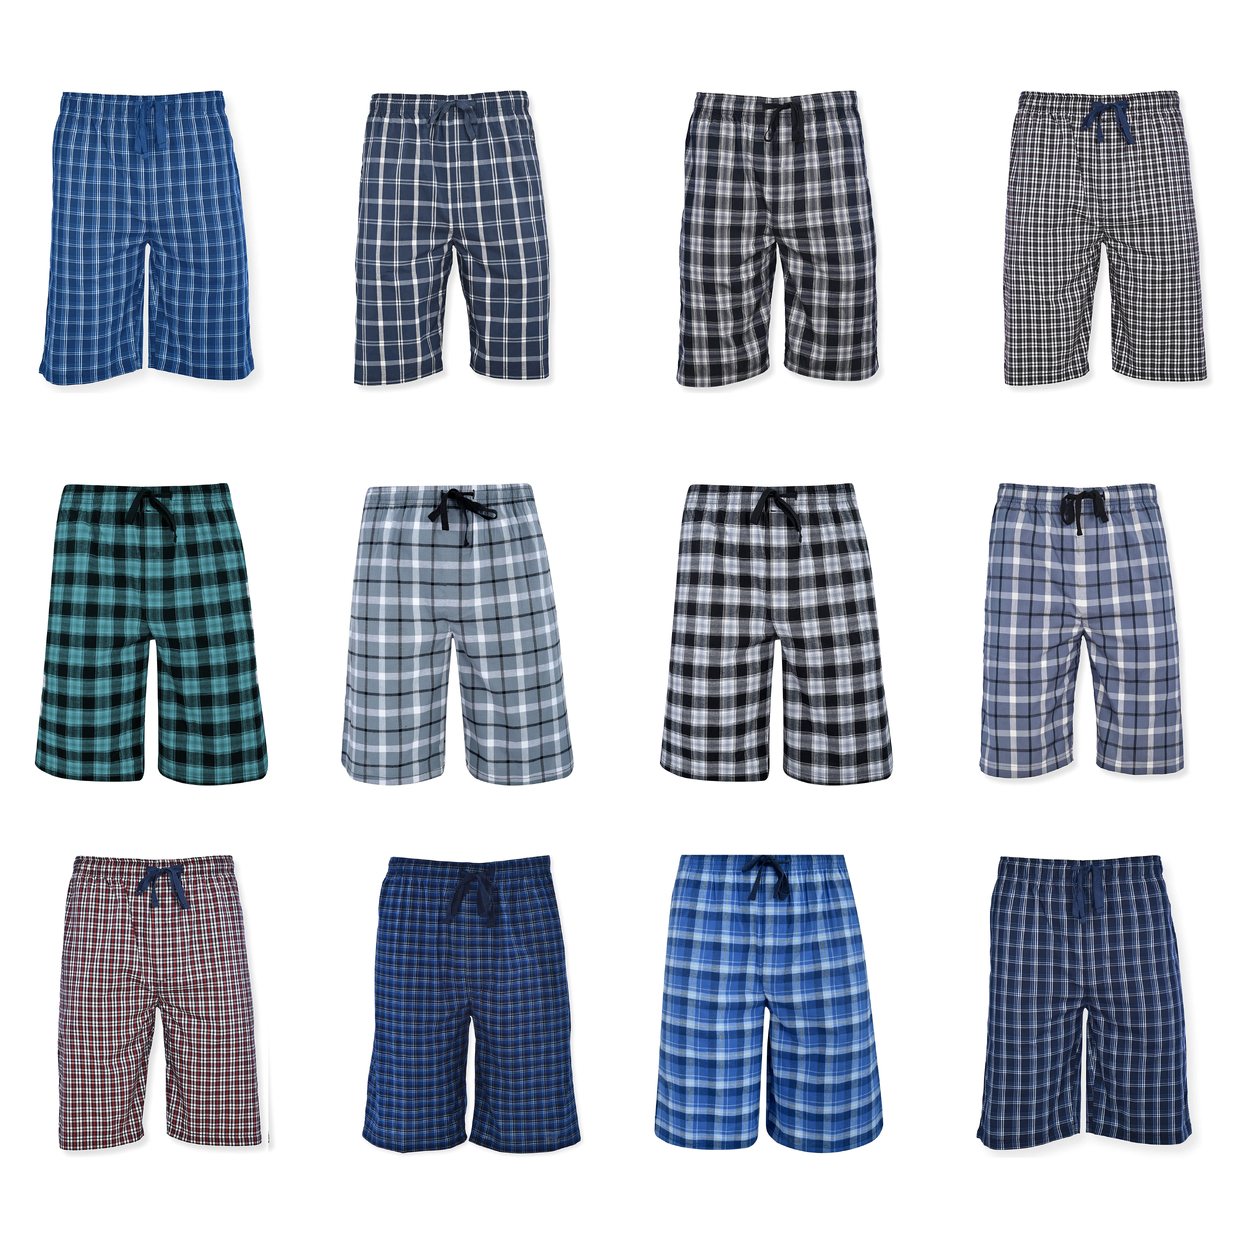 3-Pack: Men's Ultra Soft Plaid Lounge Pajama Sleep Wear Shorts - Medium